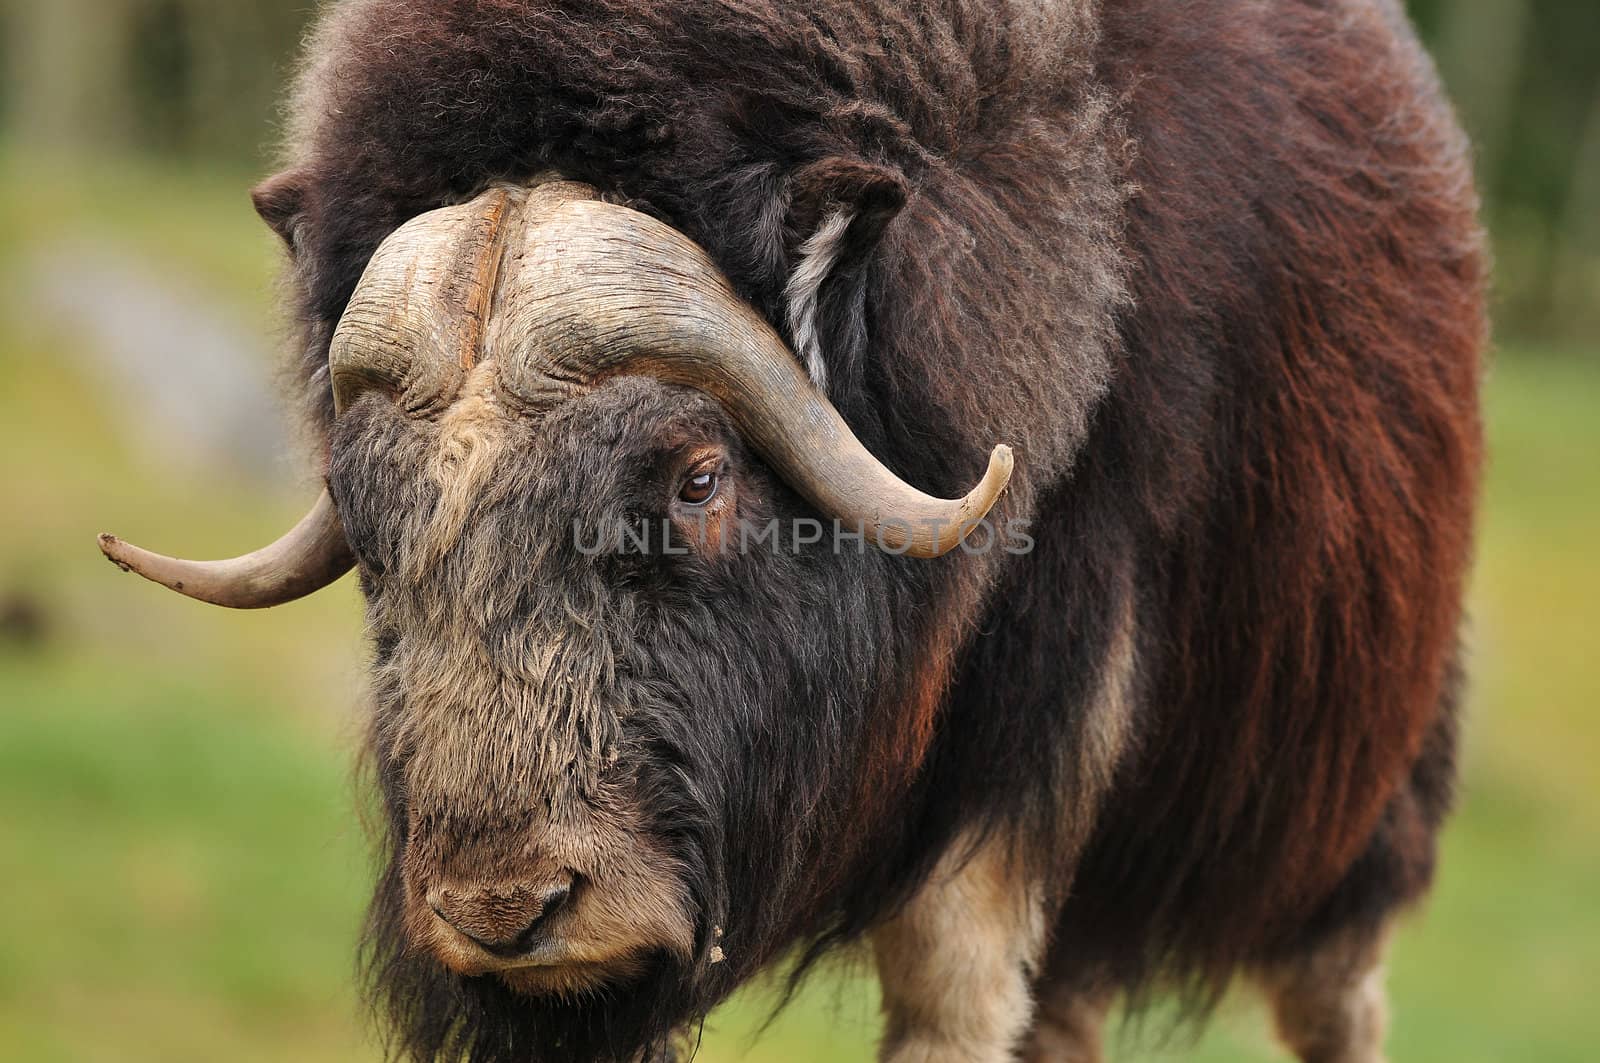 Giant musk ox by neelsky